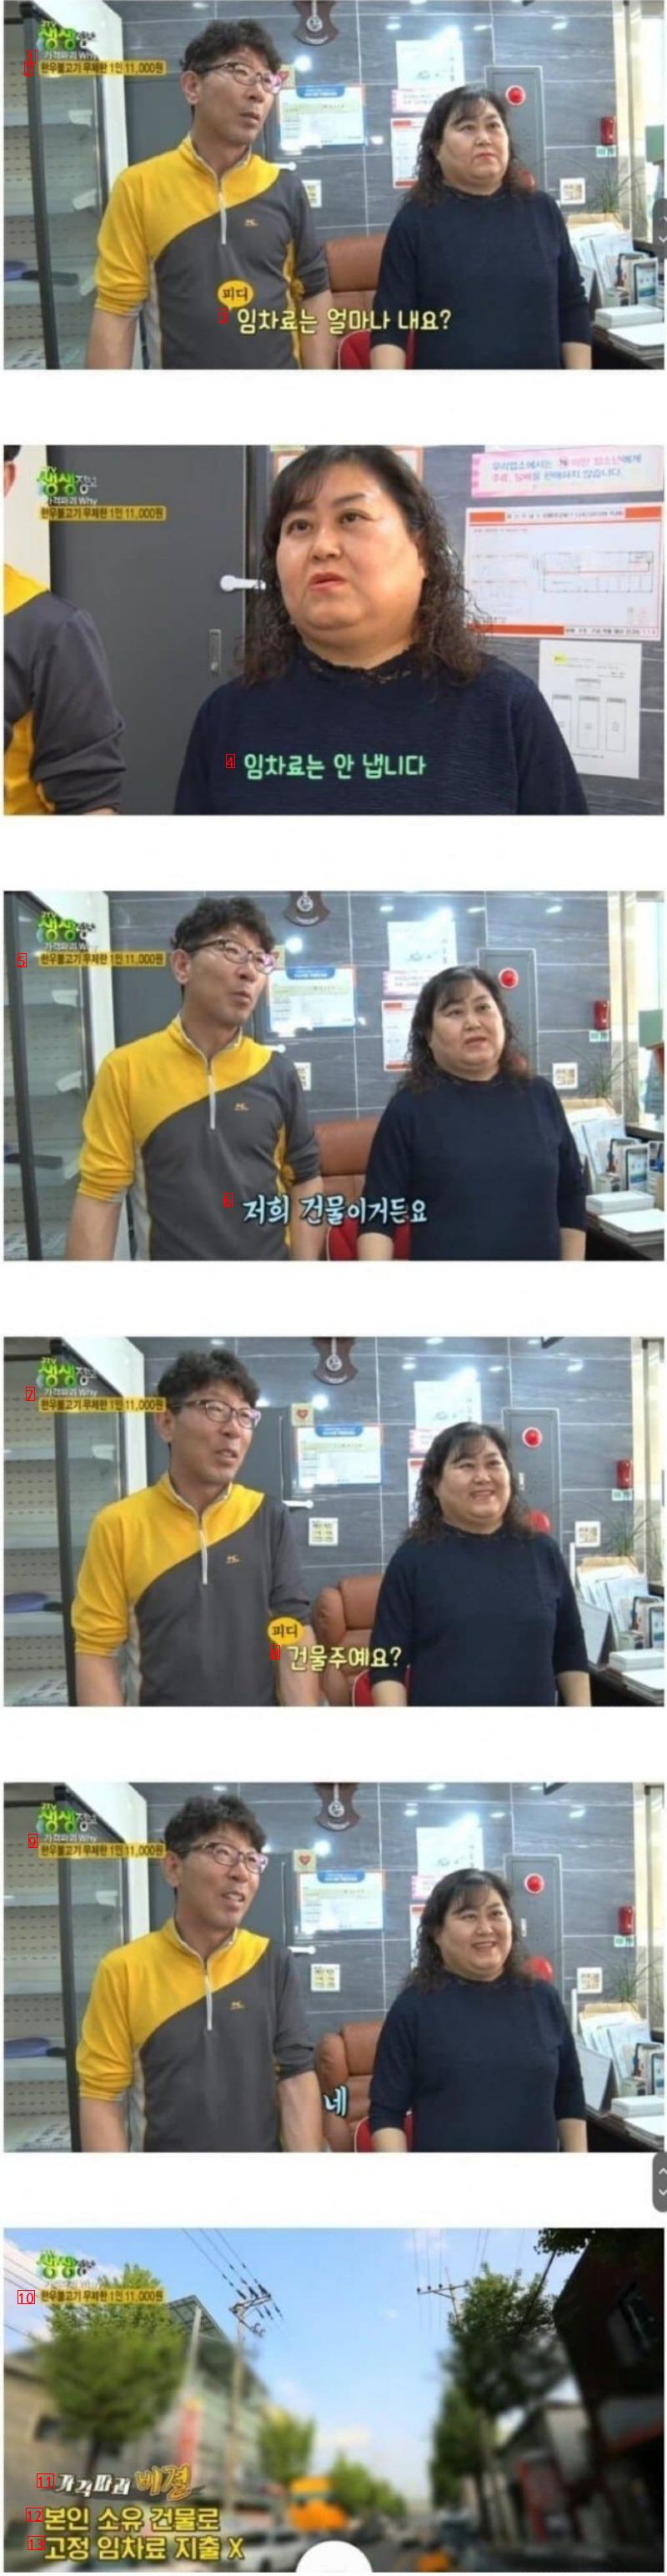 Korean beef bulgogi unlimited refill 11,000 won. The secret of a good restaurant